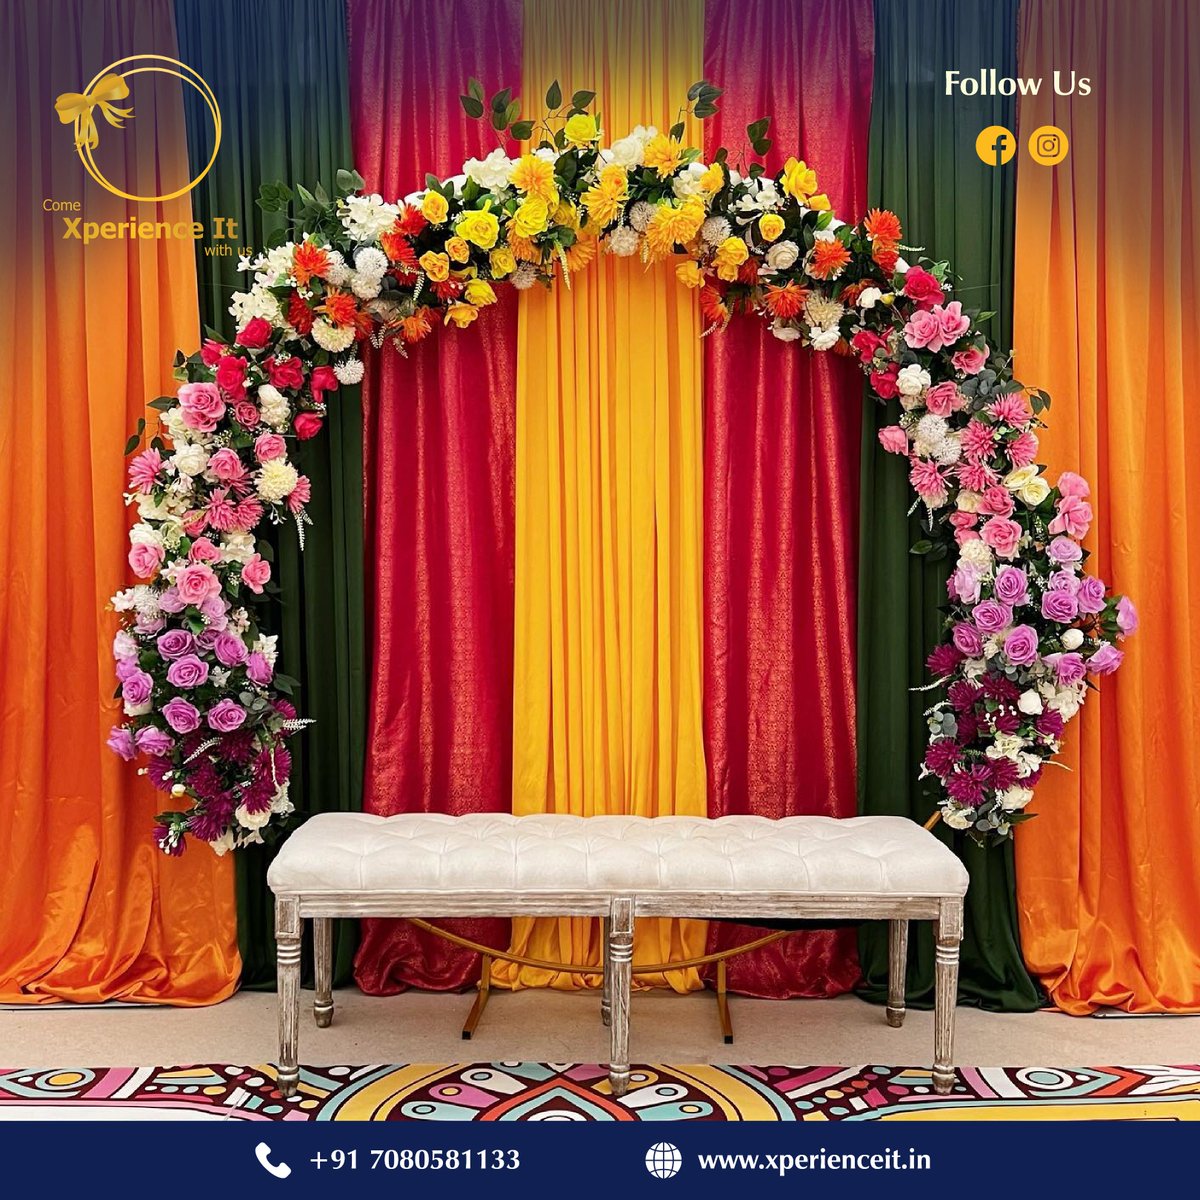 Floral Mehndi stage Decoration! ✨ Dm to book! #mehandidecoration #mehandistage #mehandinight #dholki #mehandievent #nikkah #nikkahceremony #engagement #flowerwall #nikah #redroses #nikahdecoration #flowerwallbackdrop #mehndi #mehandisetup #eventdecor #flowerwallrental